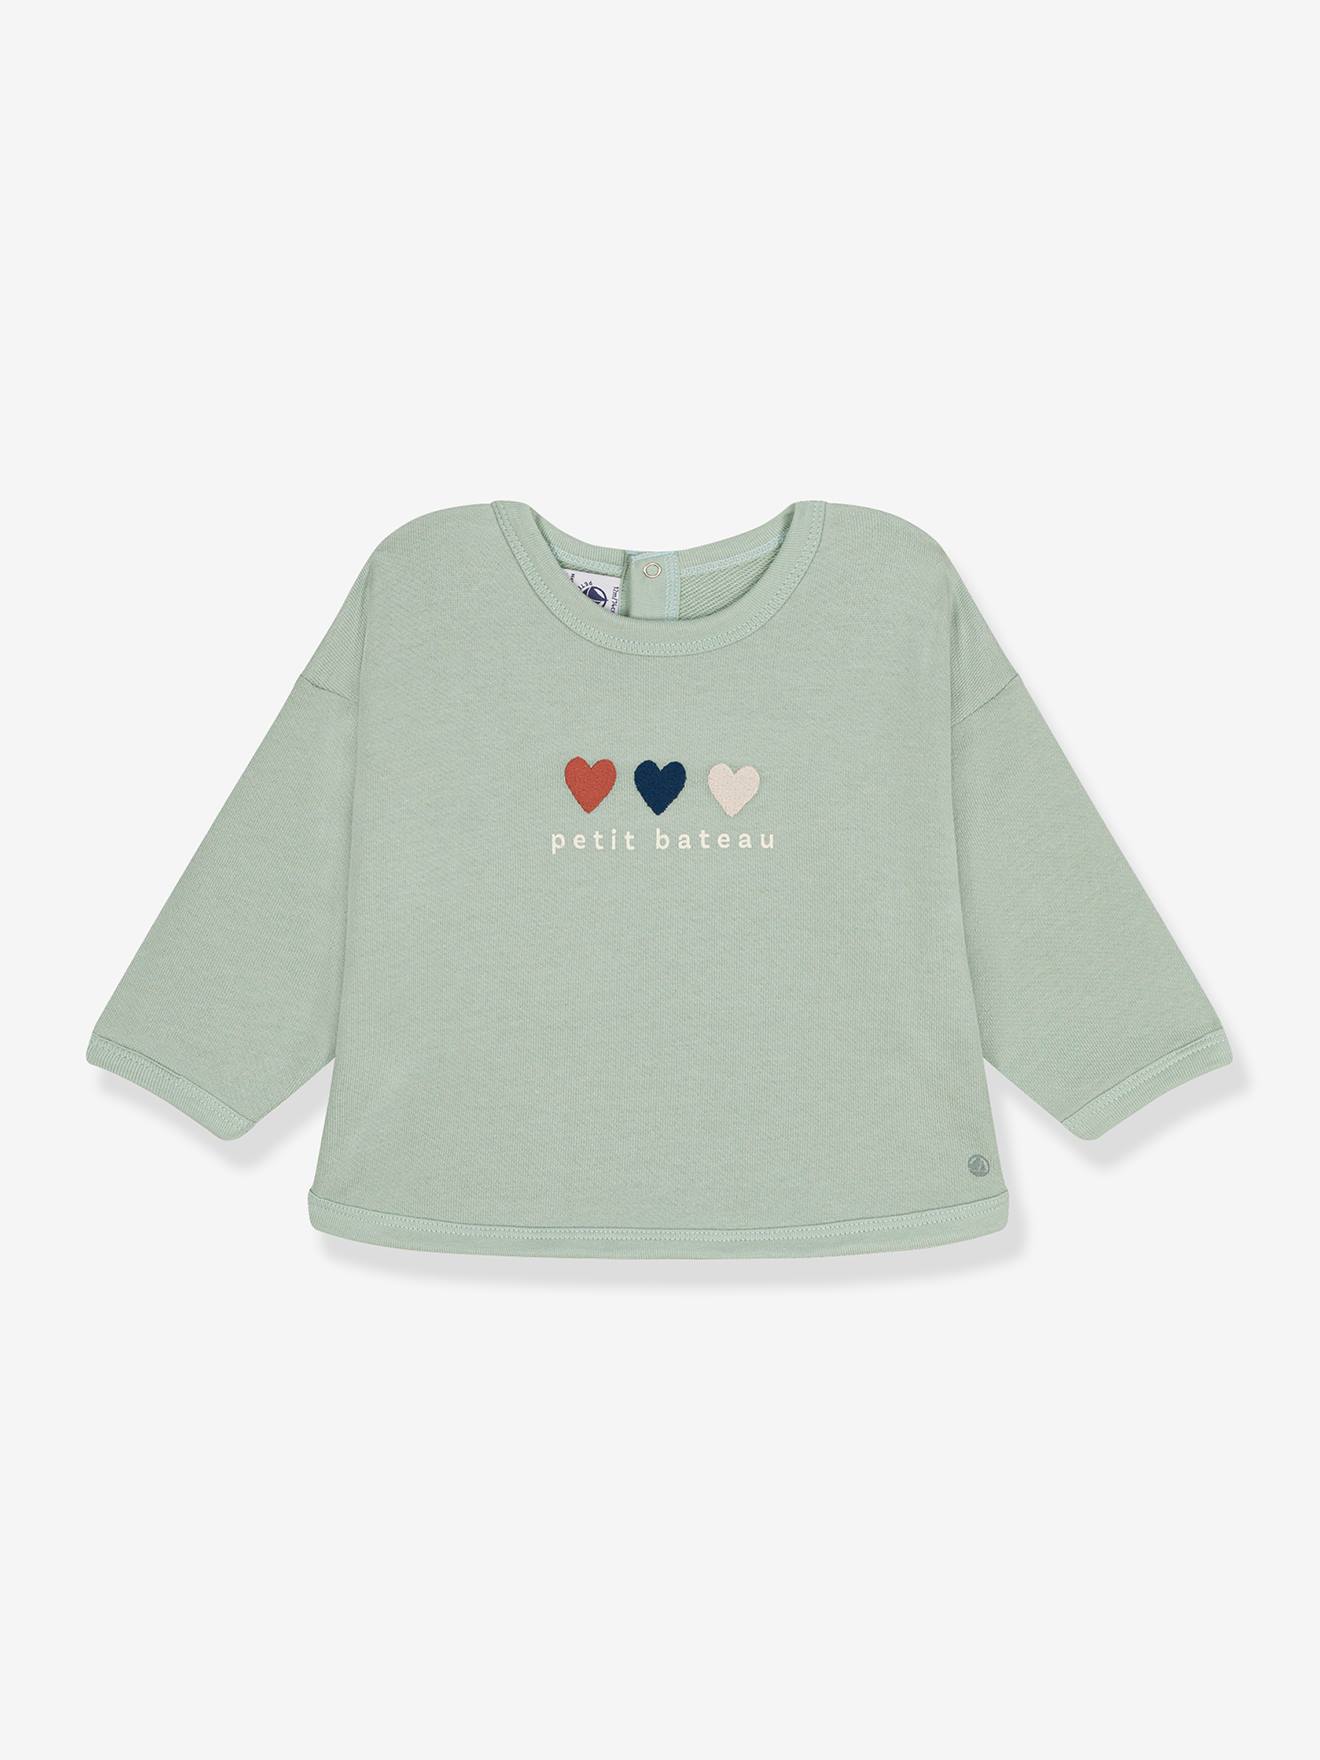 Hearts Sweatshirt for Girls, by PETIT BATEAU almond green